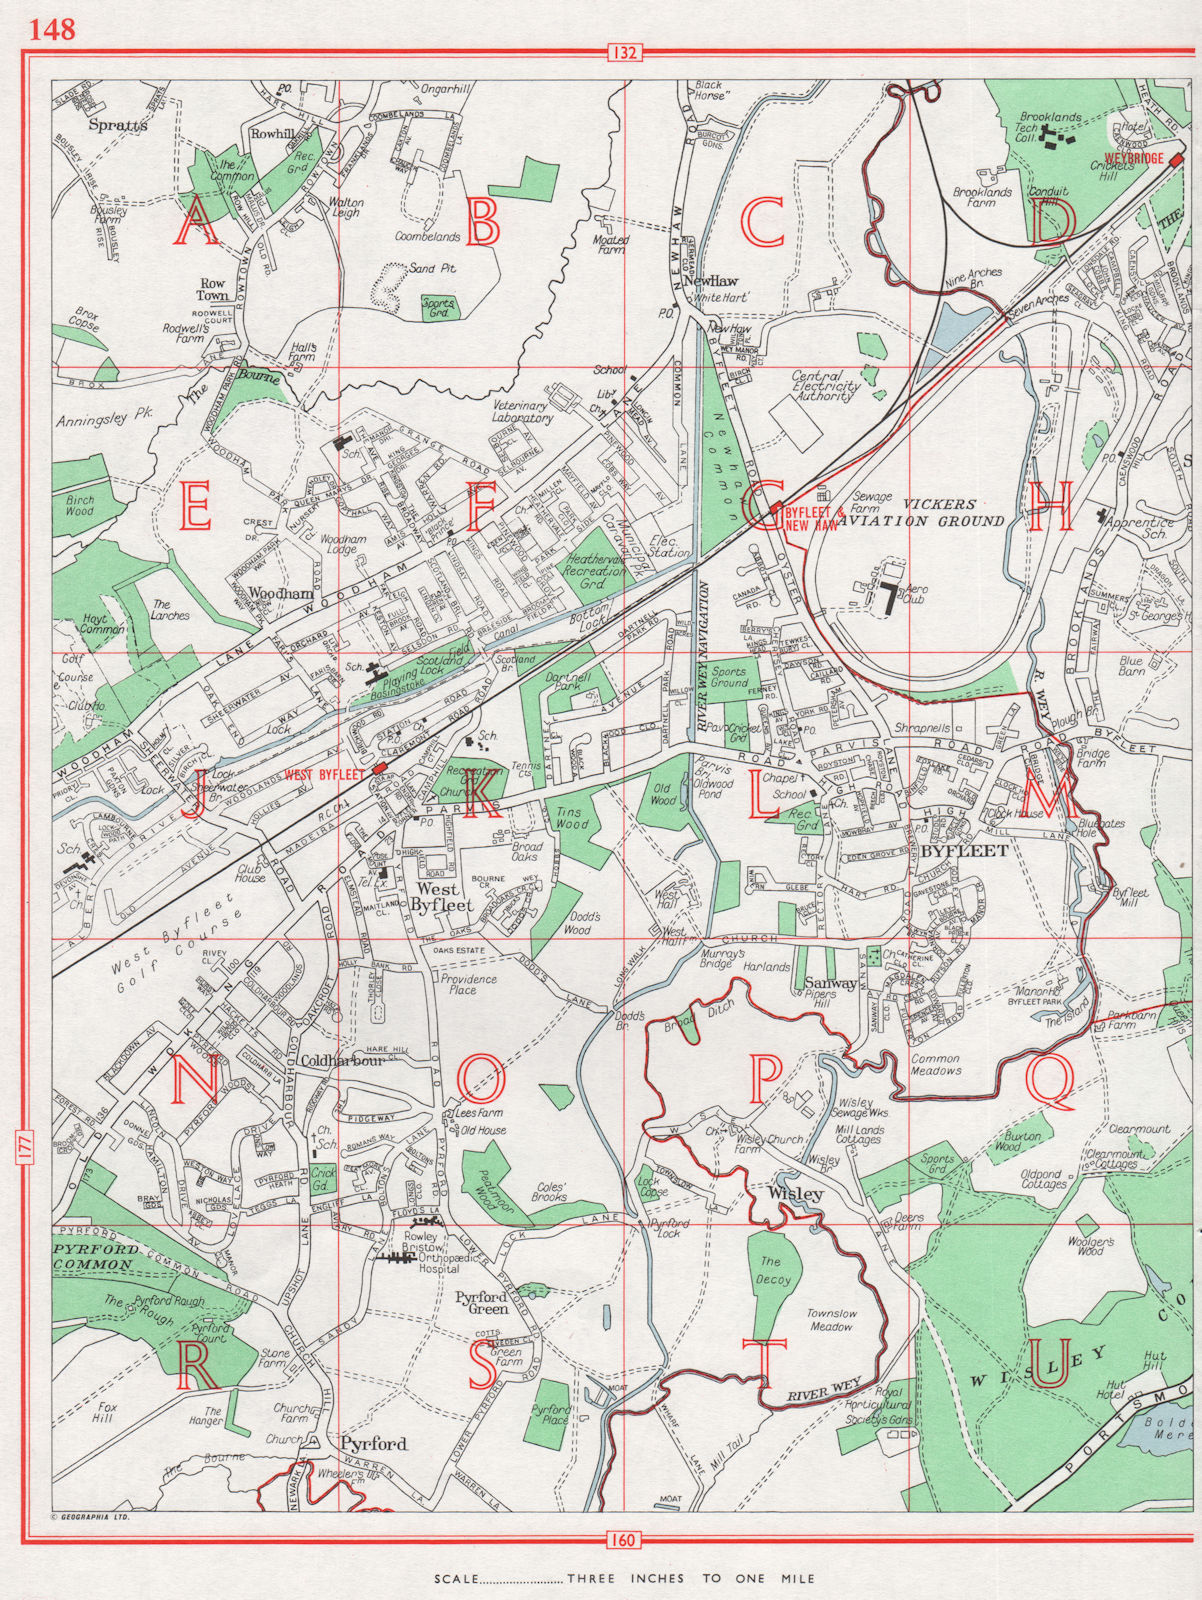 BYFLEET. Woodham Pyrford Vickers Aviation Brooklands. Pre-M25. Surrey 1964 map